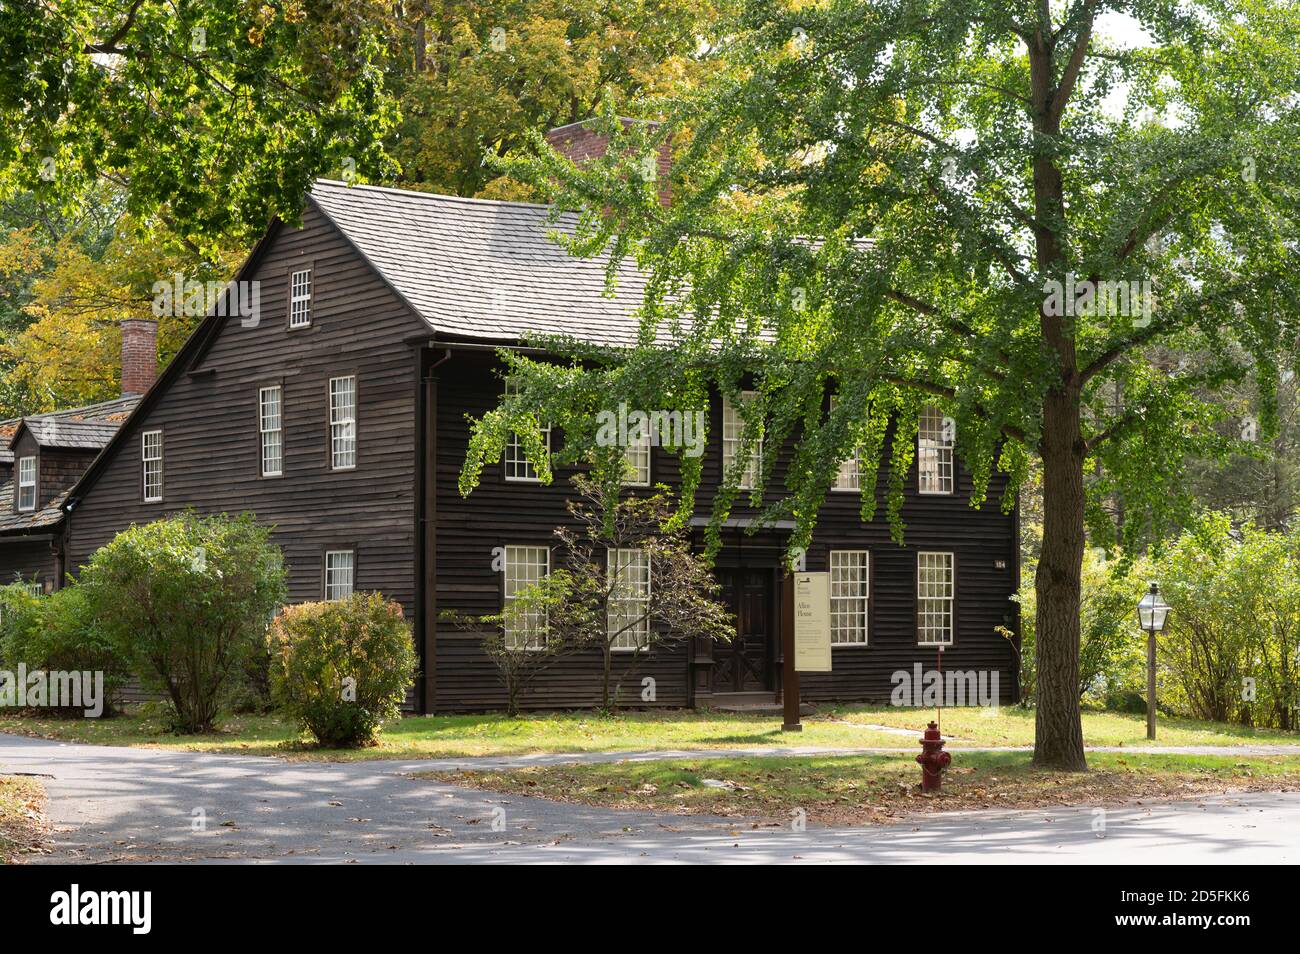 Storico Deerfield Village, Deerfield, Massachusetts, USA, un esempio di architettura coloniale americana Foto Stock